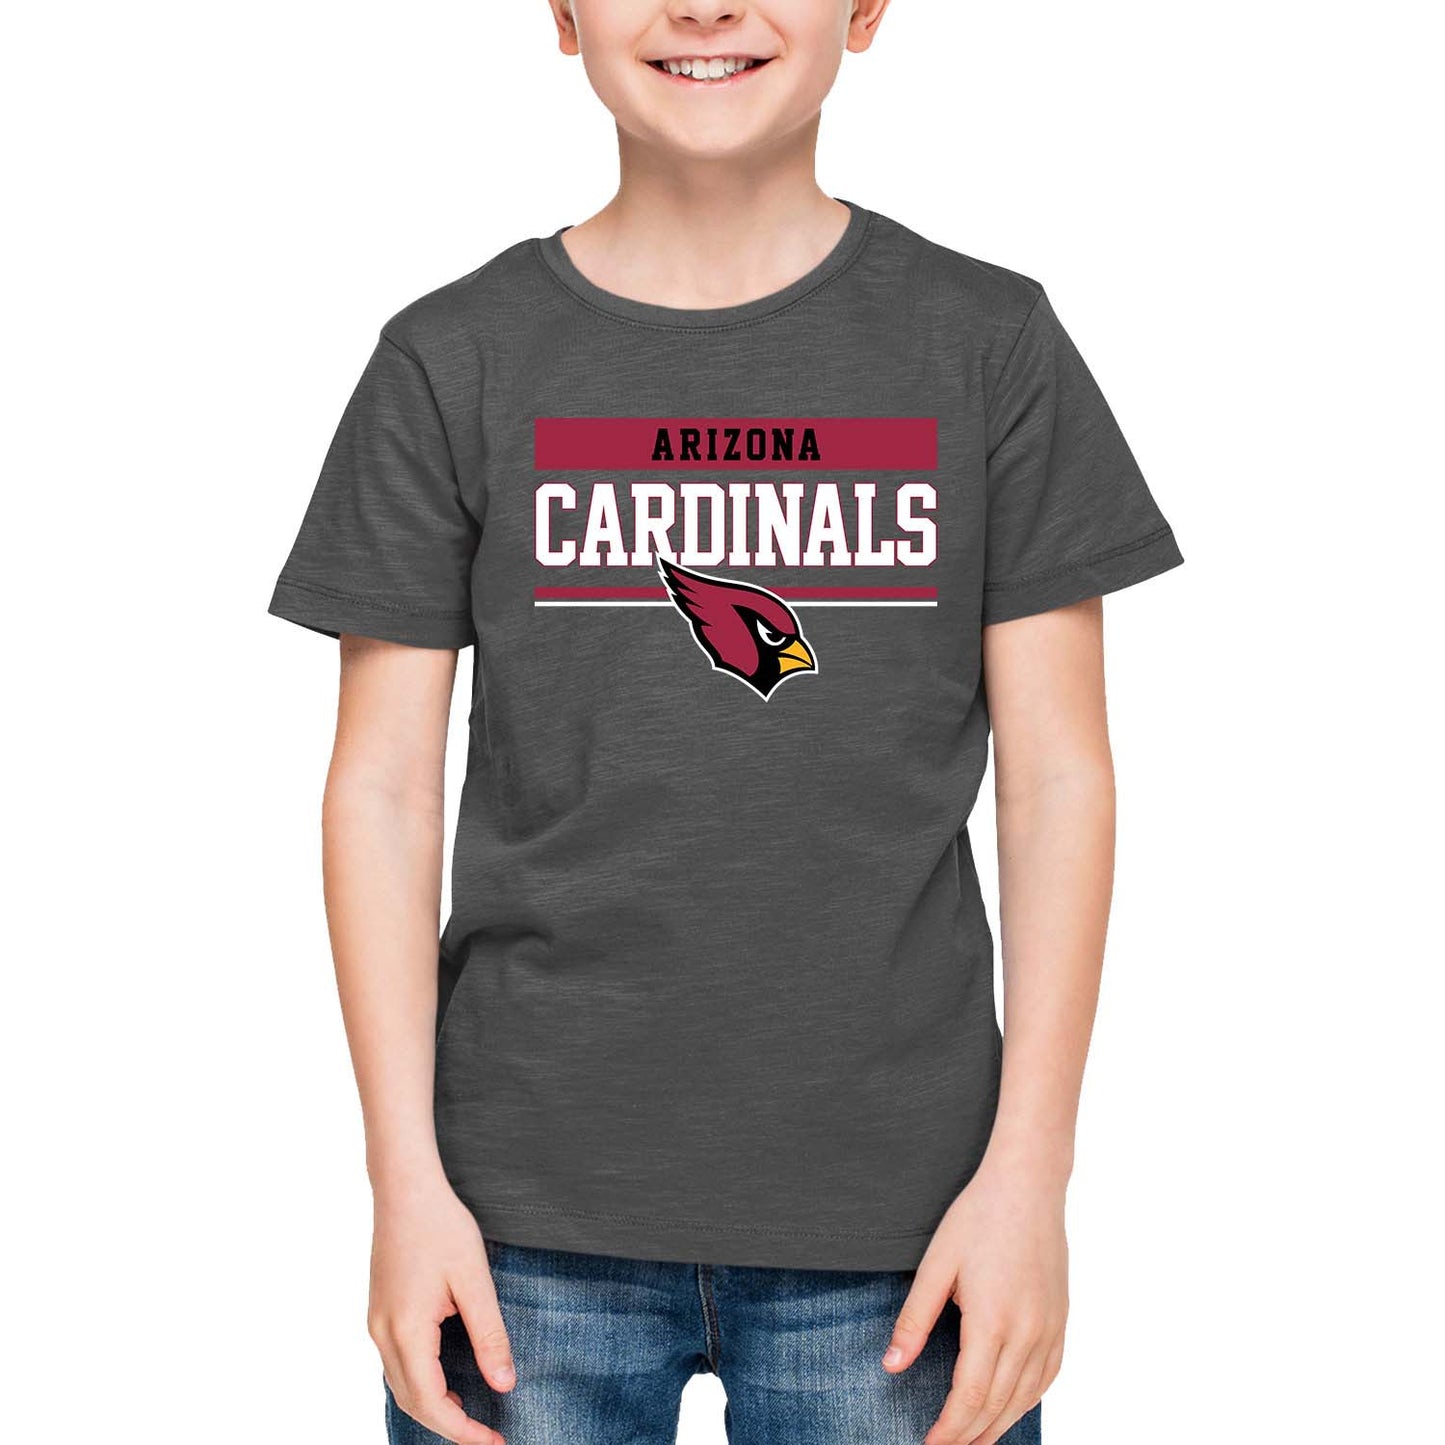 Arizona Cardinals NFL Youth Short Sleeve Charcoal T Shirt - Charcoal